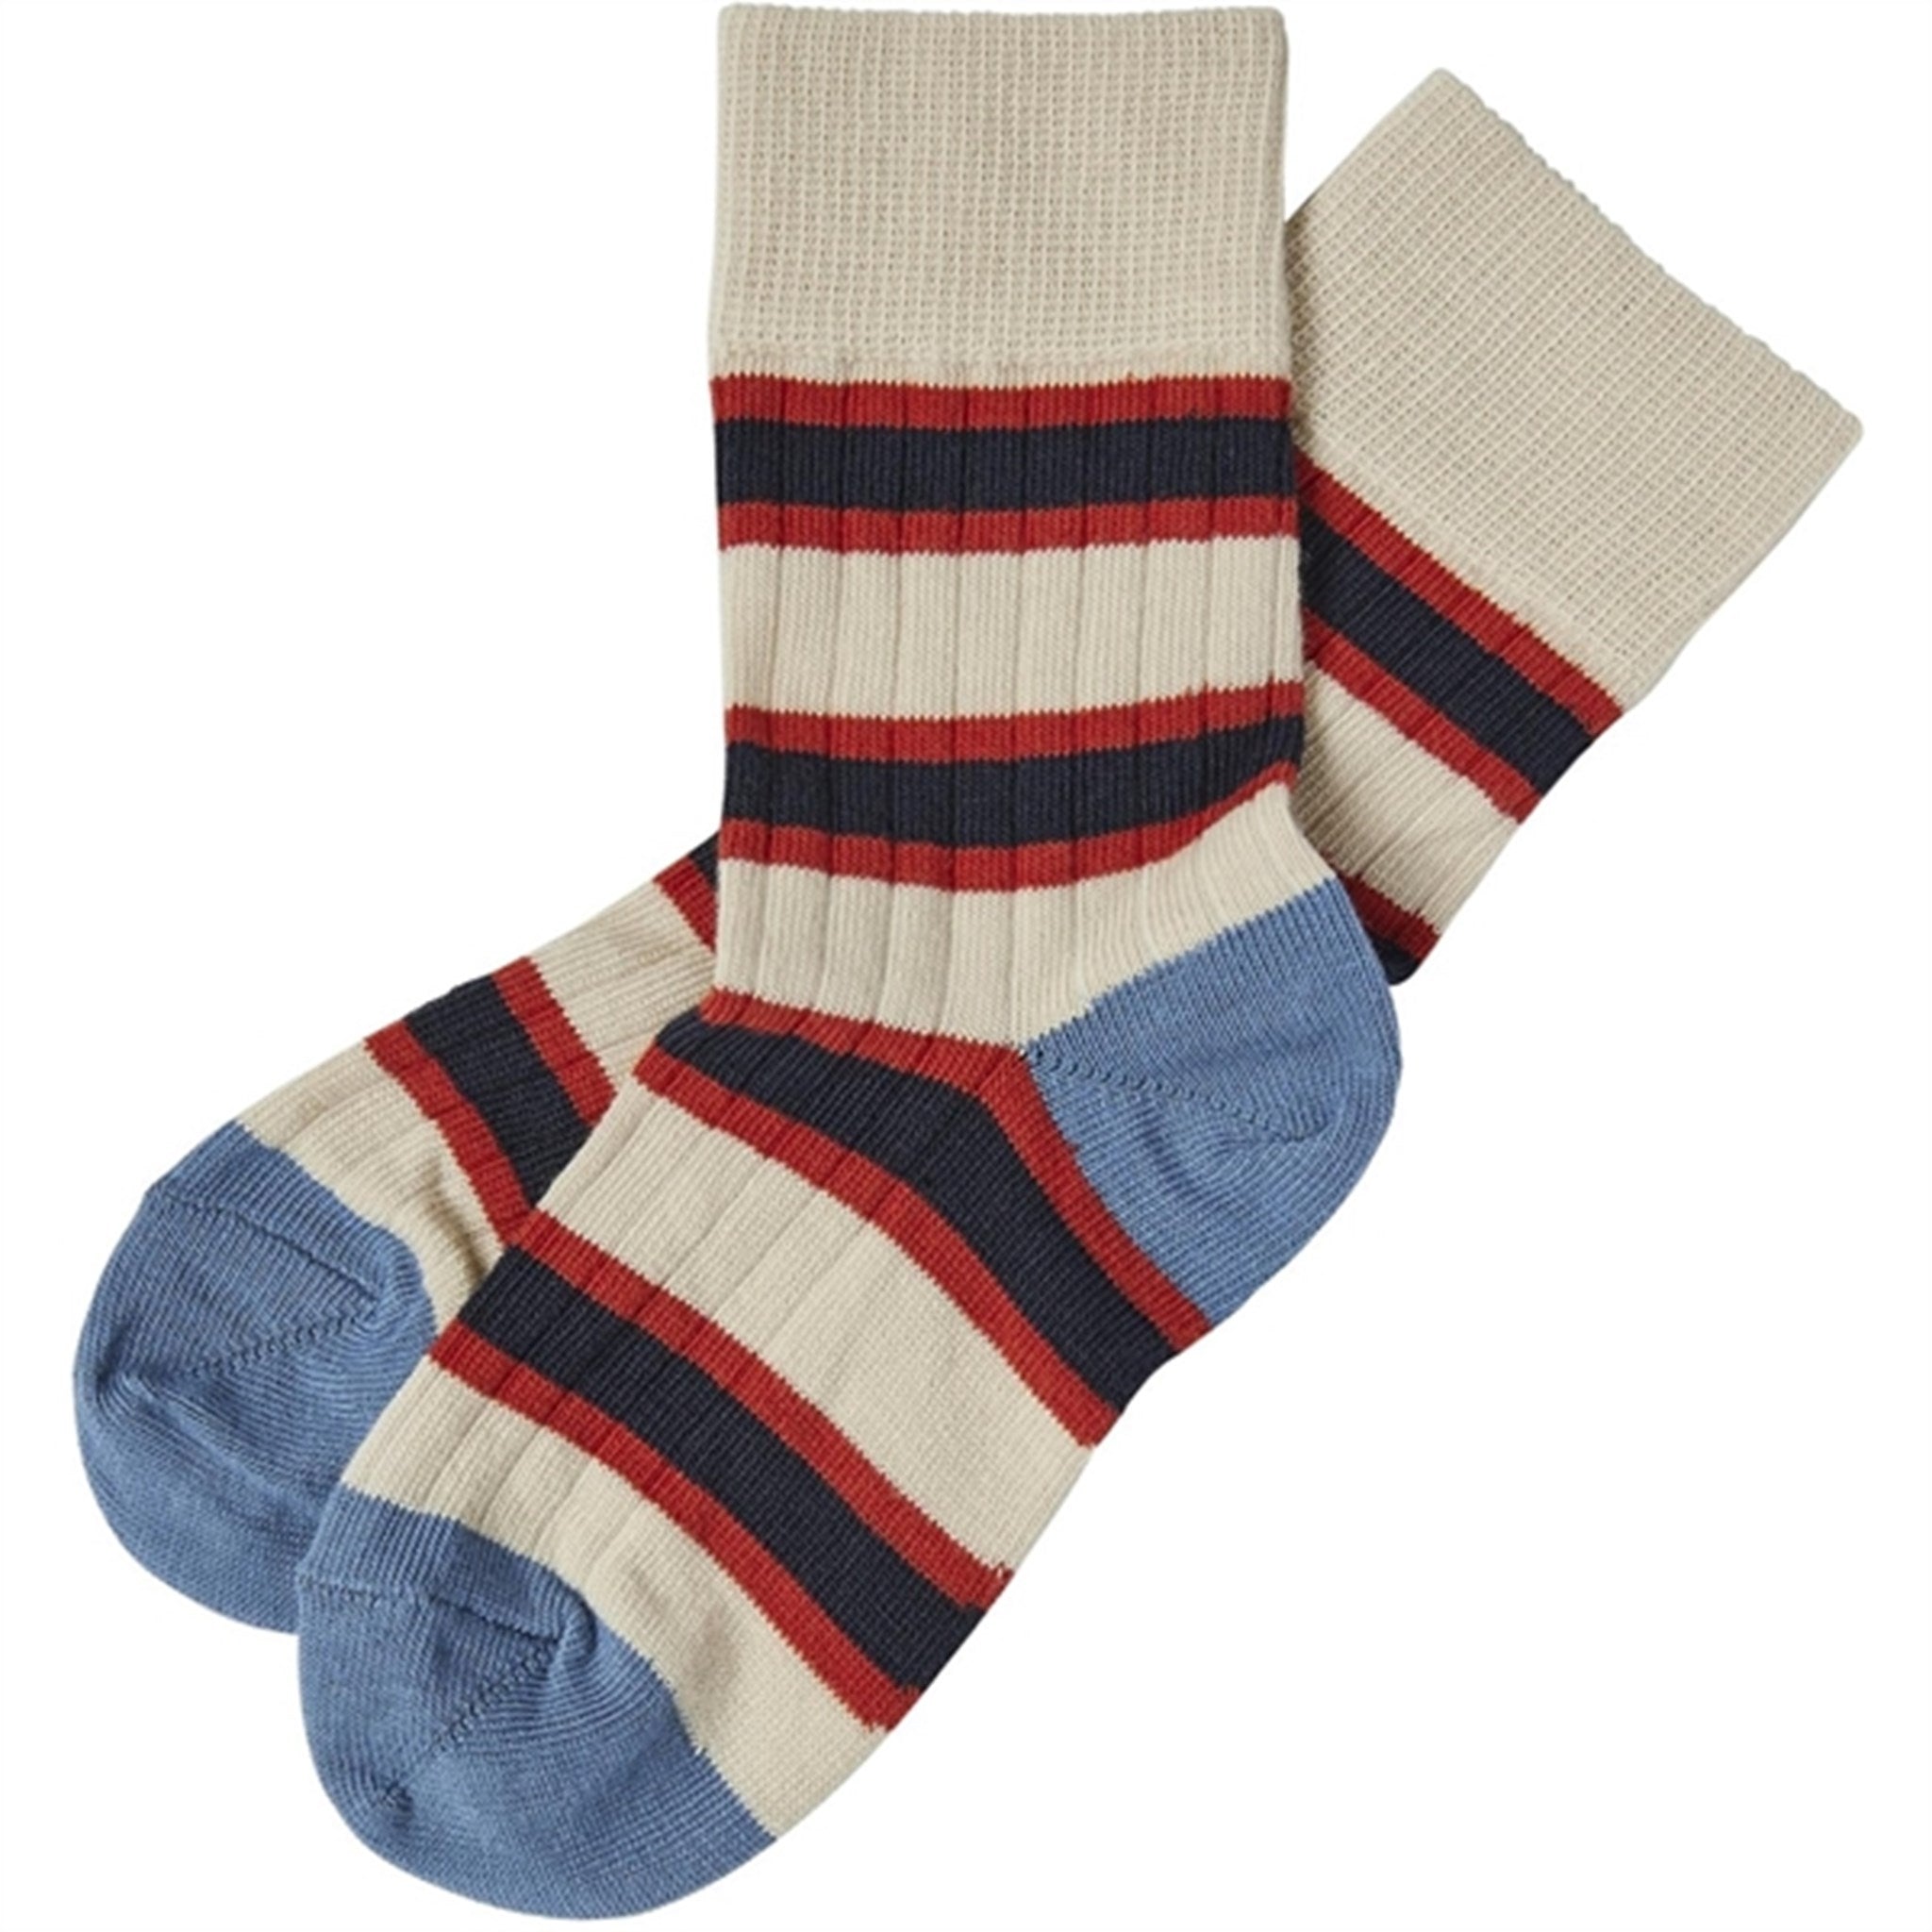 Women's Rainbow Multistripe Knee High Socks - Socks n Socks